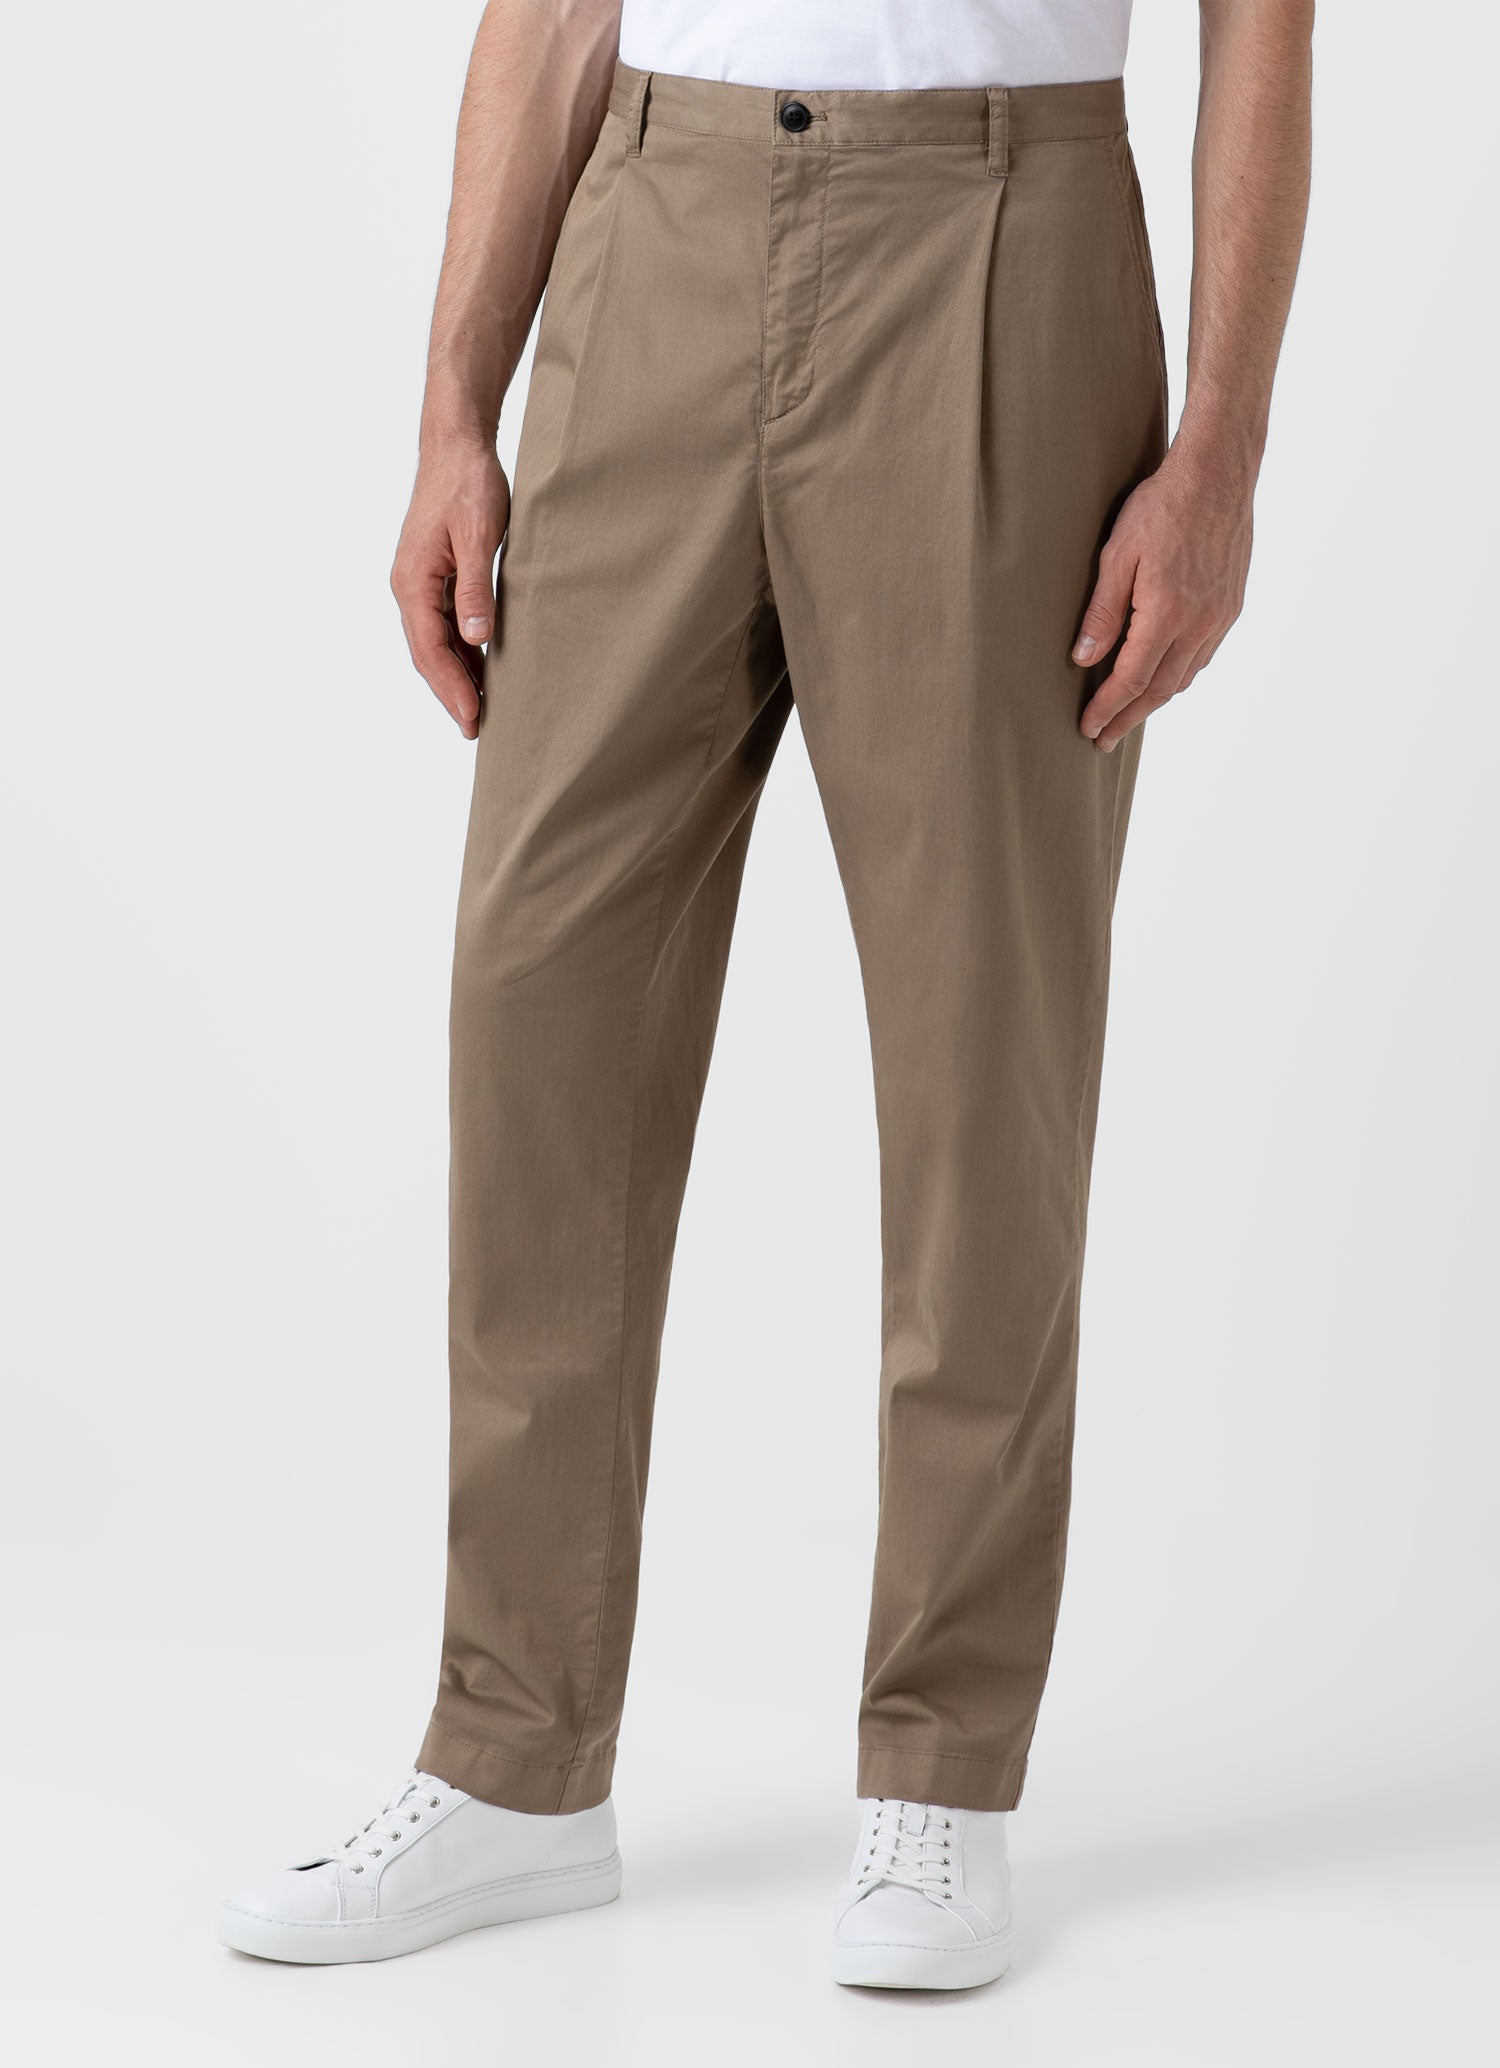 PLUS Pleated Satin Pants | KEY Boutique | Nappanee Indiana – K.E.Y. Boutique